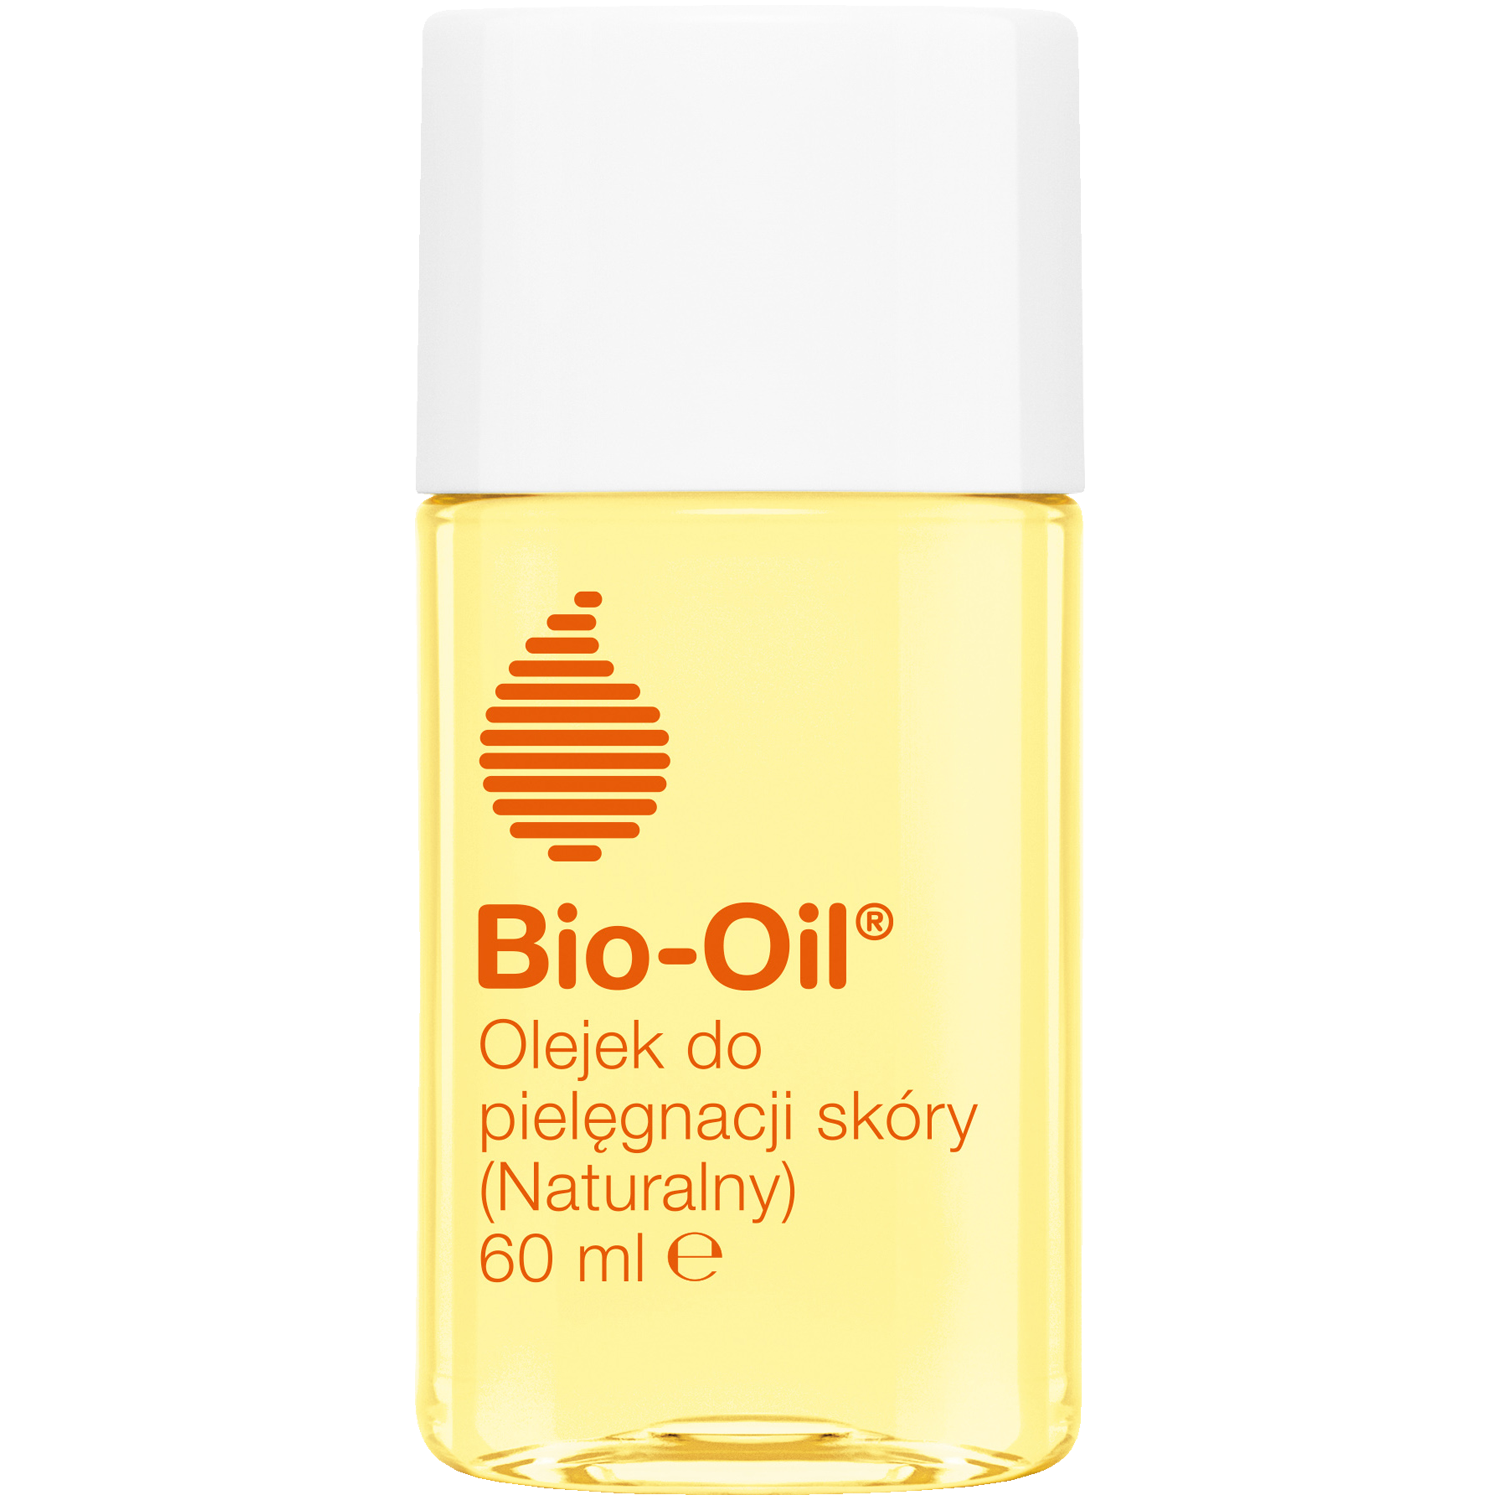 bio oil hebe